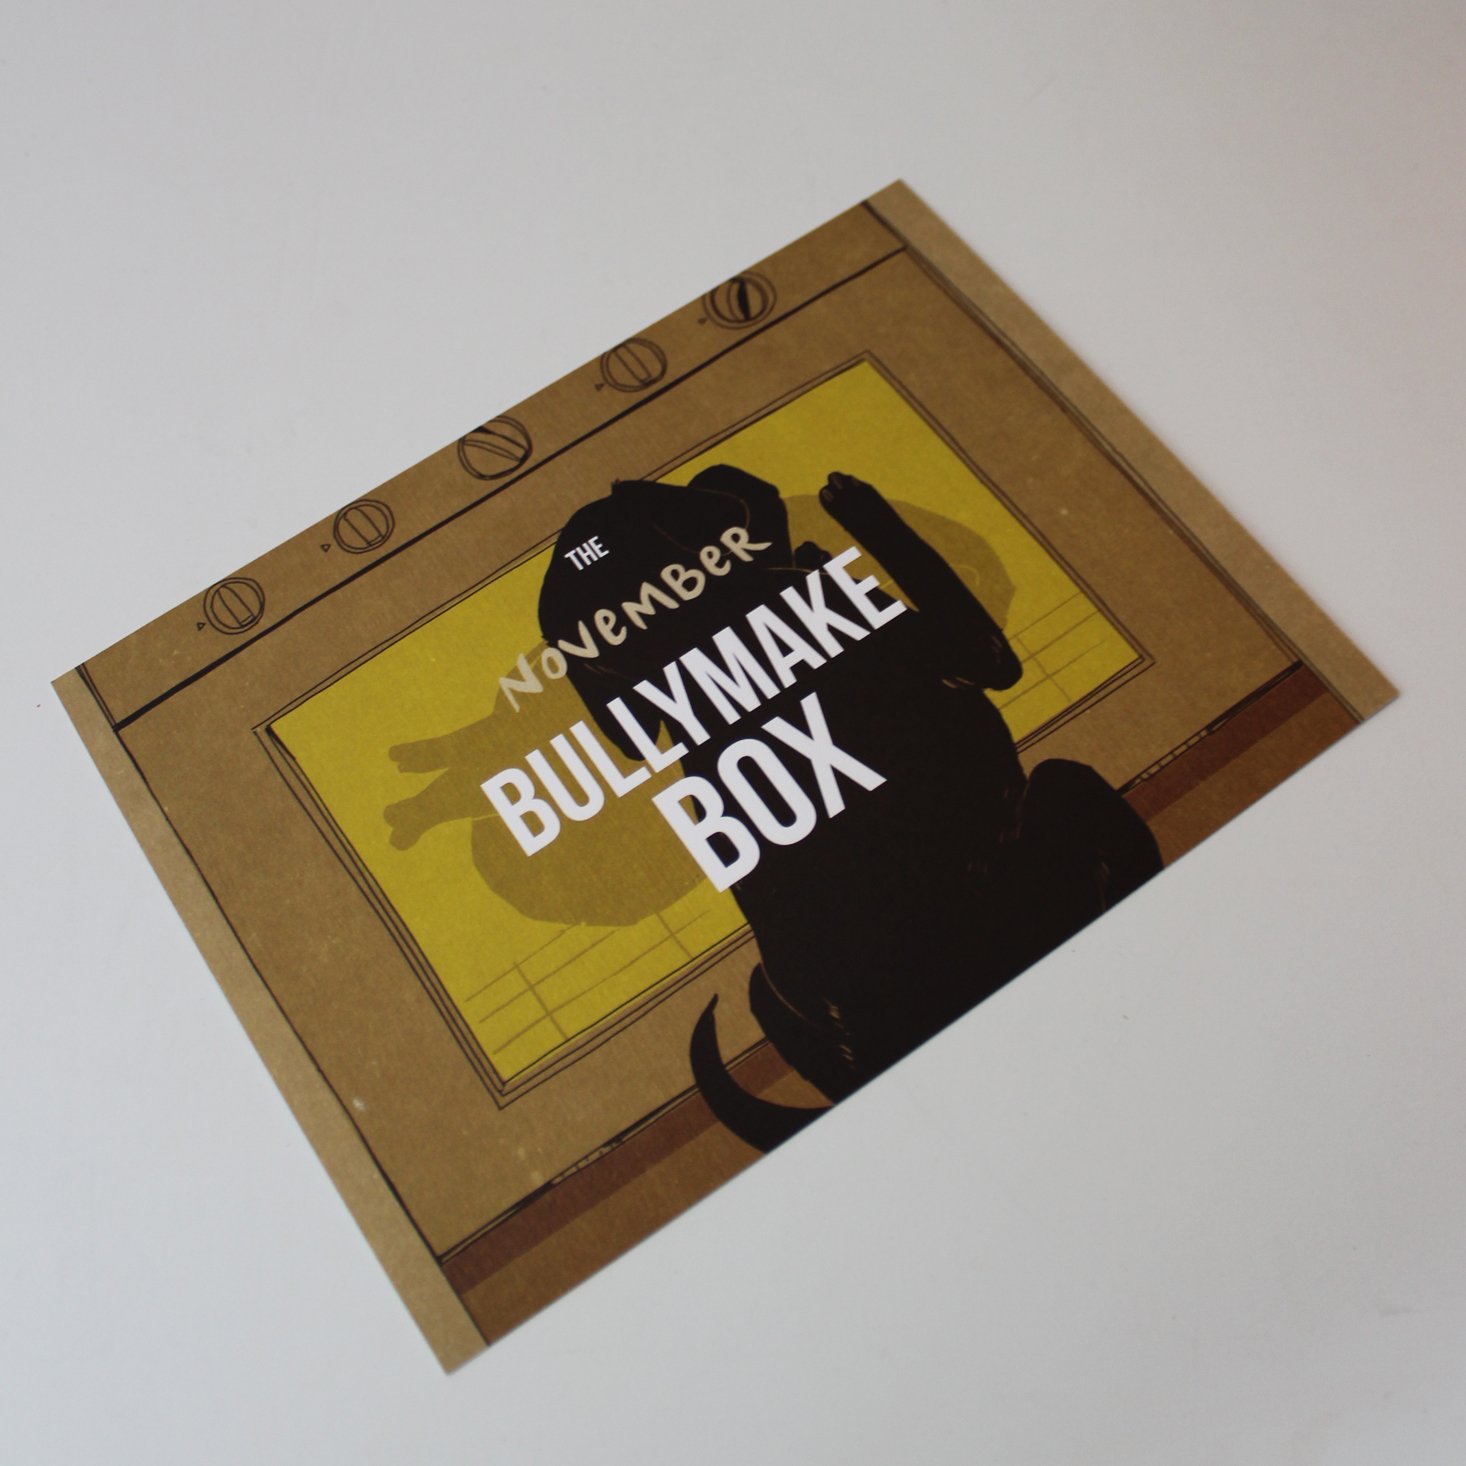 Bullymake Box November 2019 Booklet Front